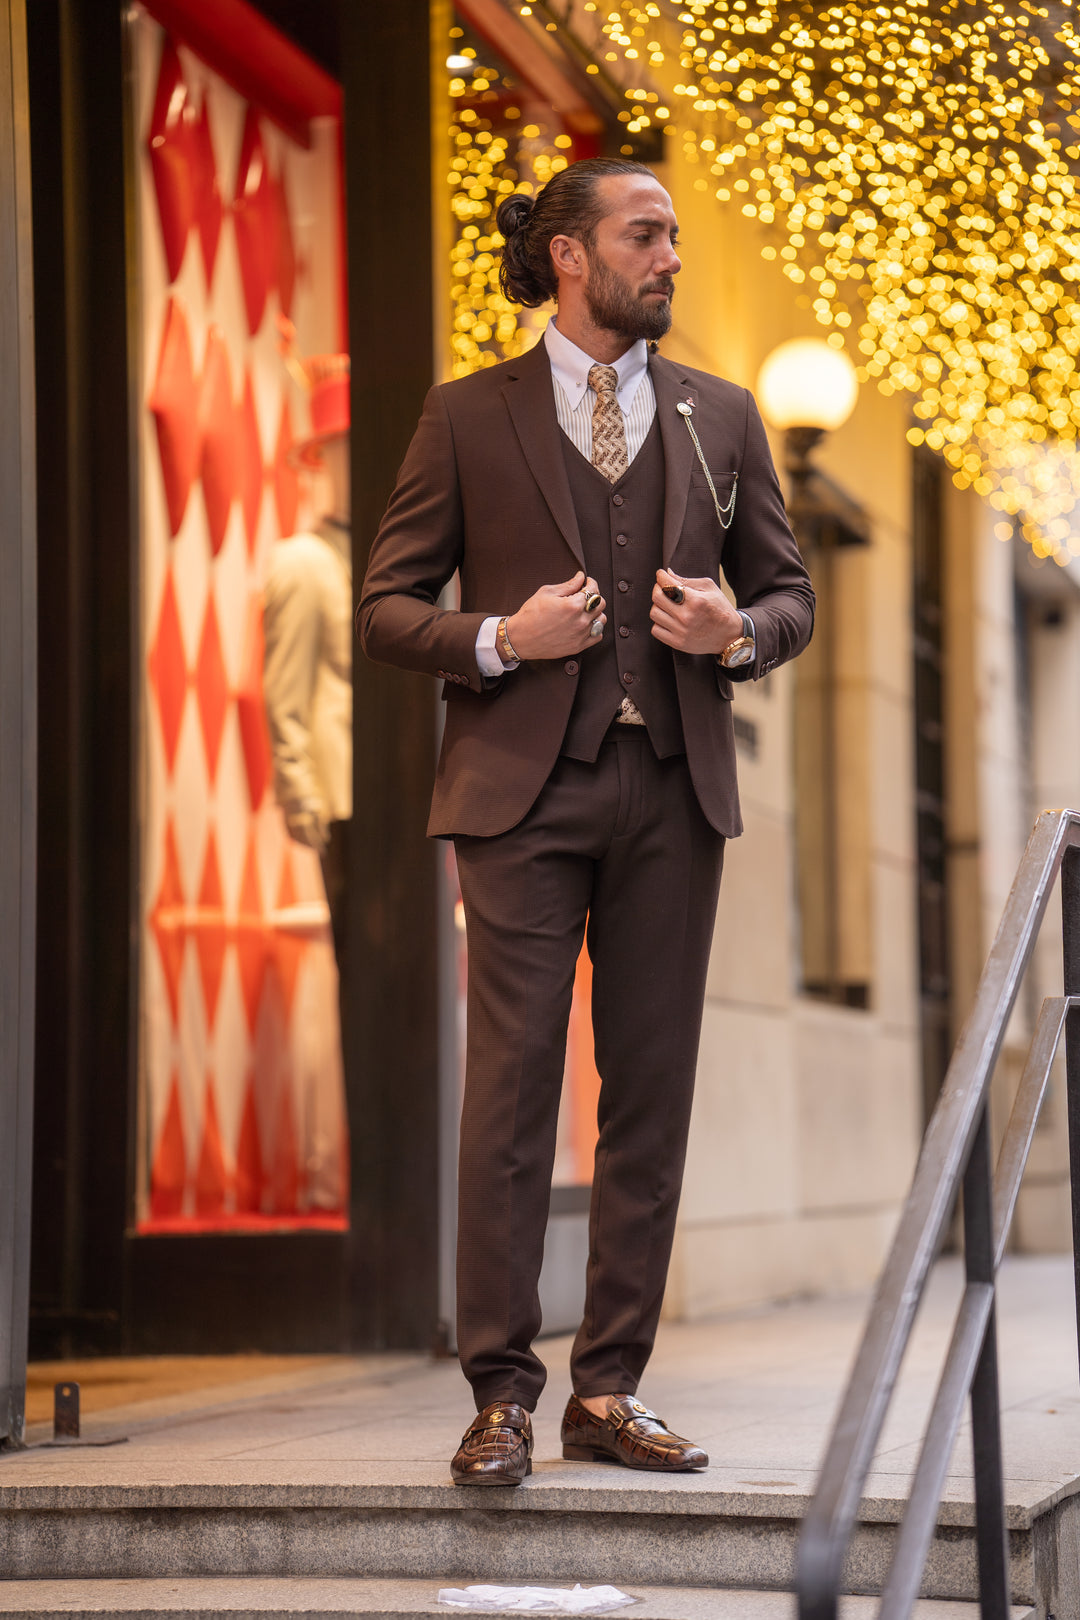 Special Design Slim Fit Self-patterned Suit - Brown